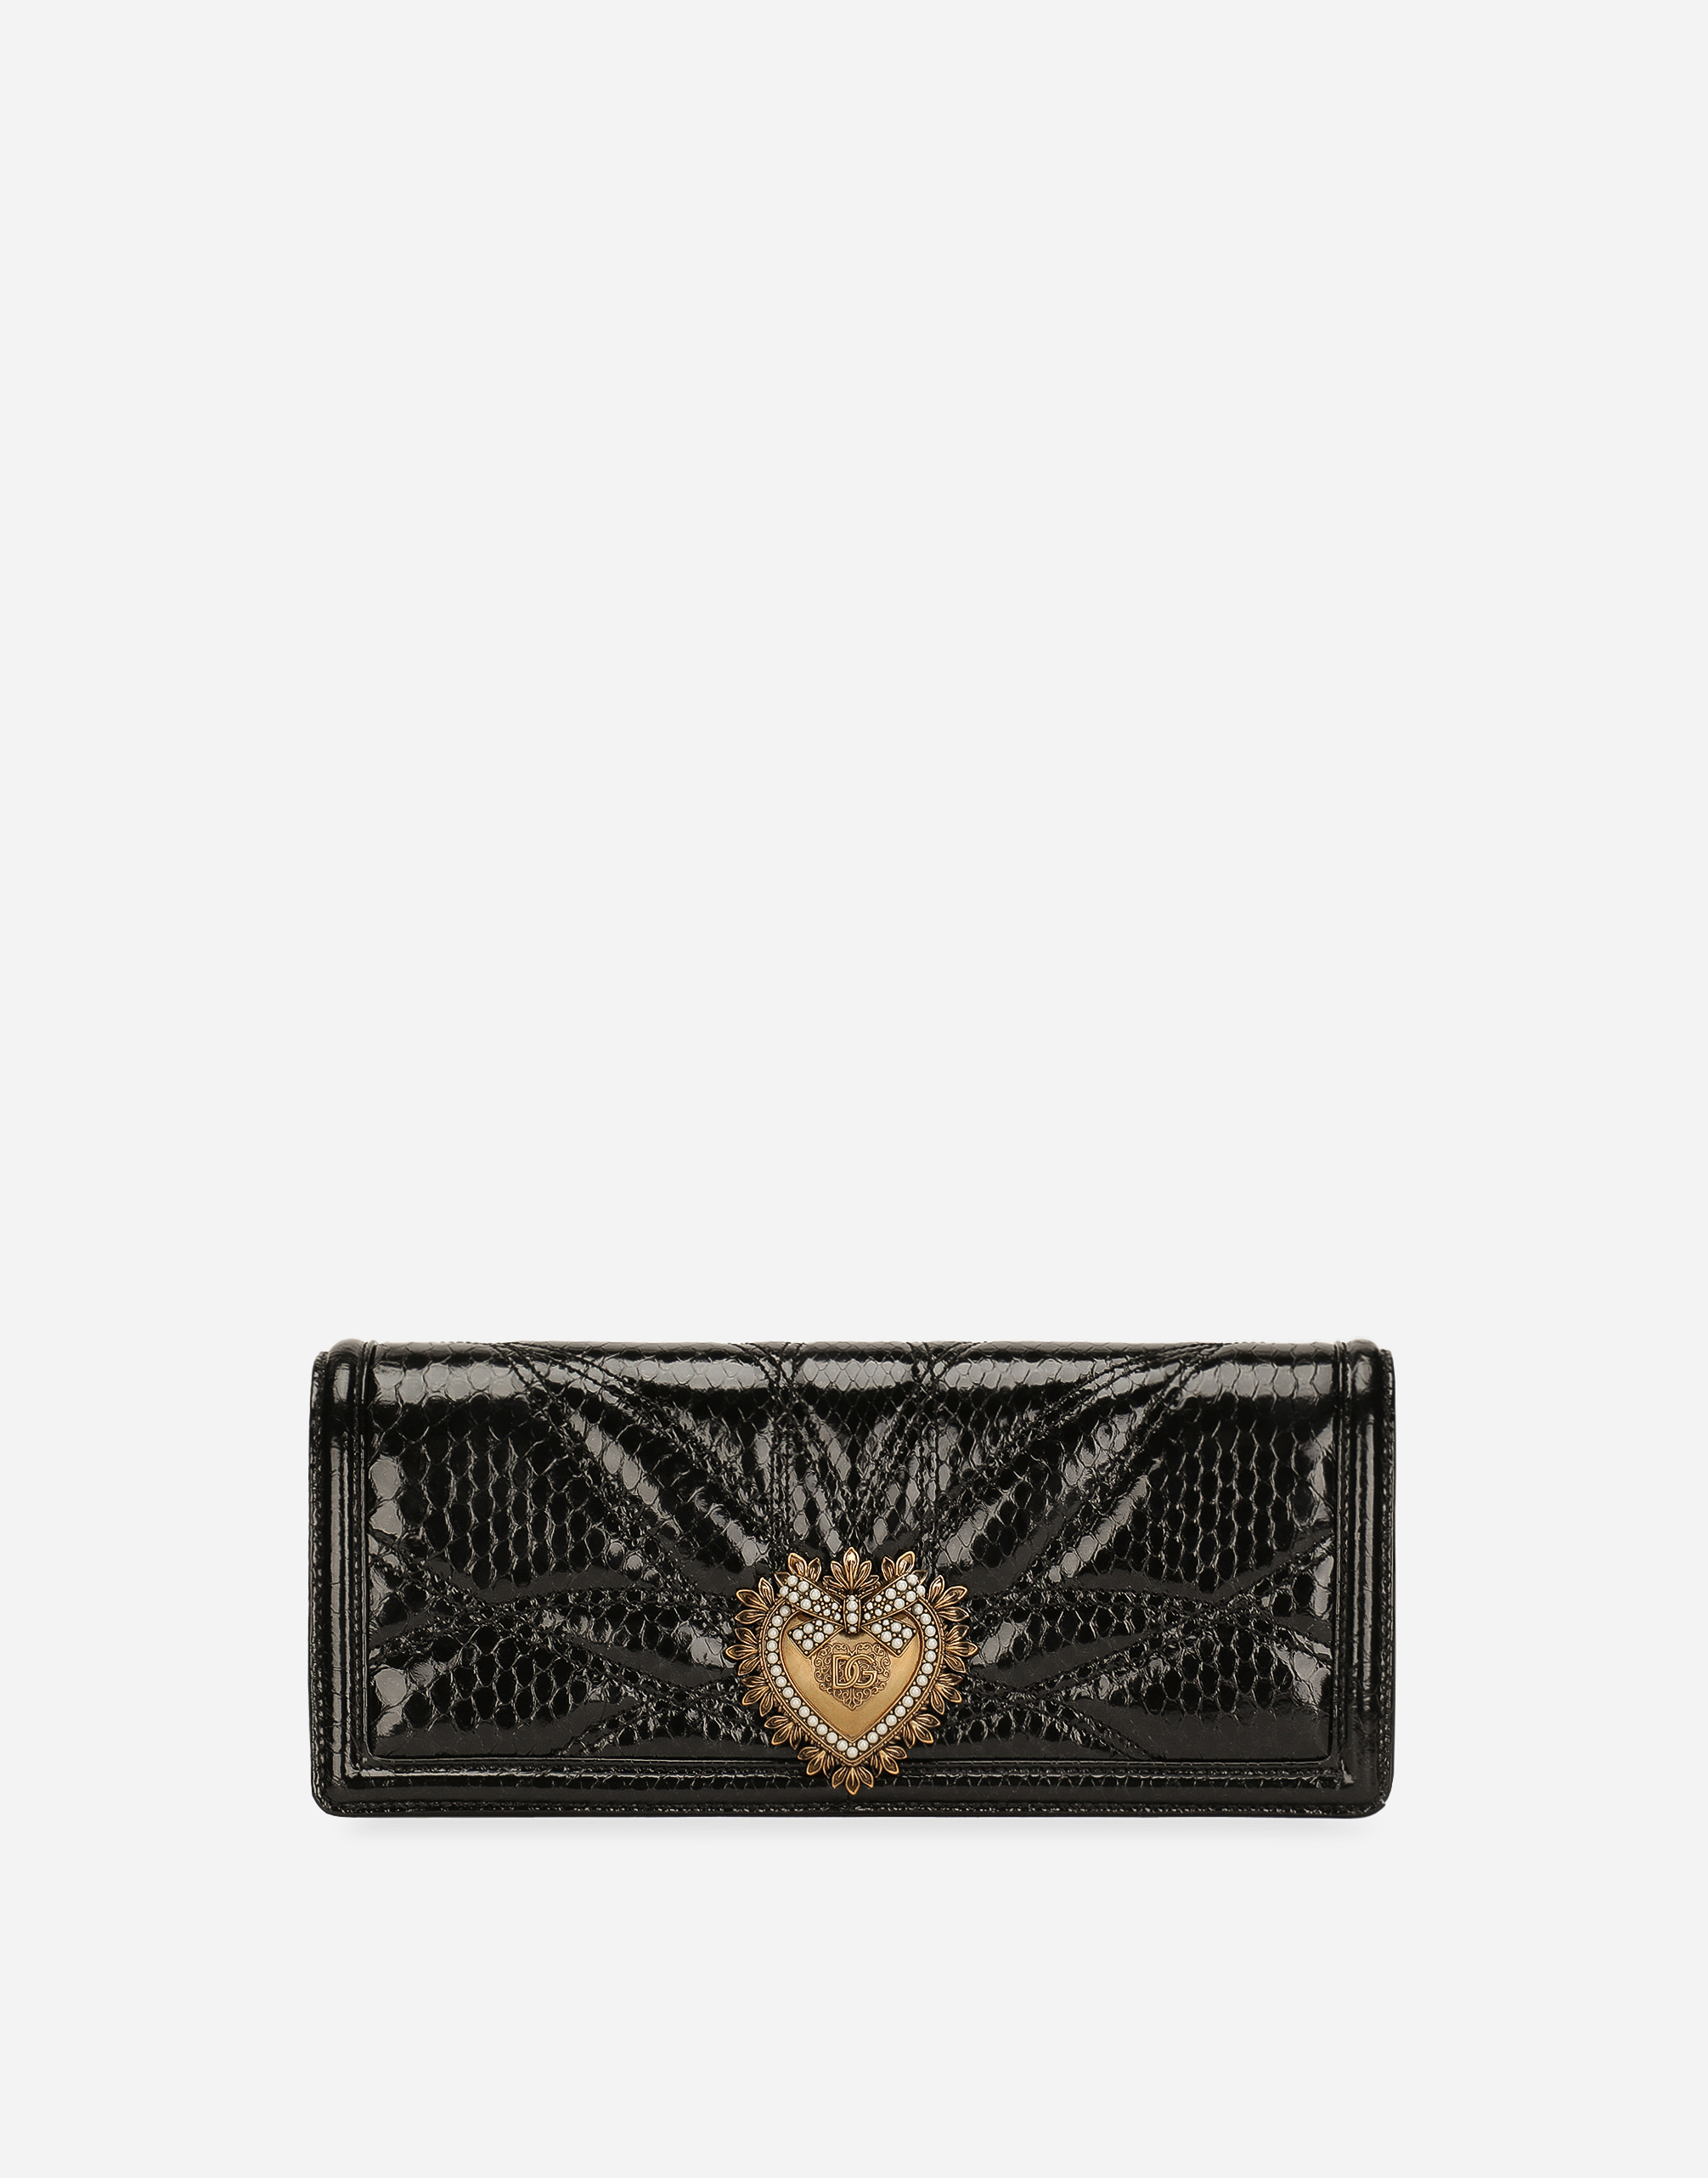 Dolce & Gabbana Devotion Baguette Bag In Black